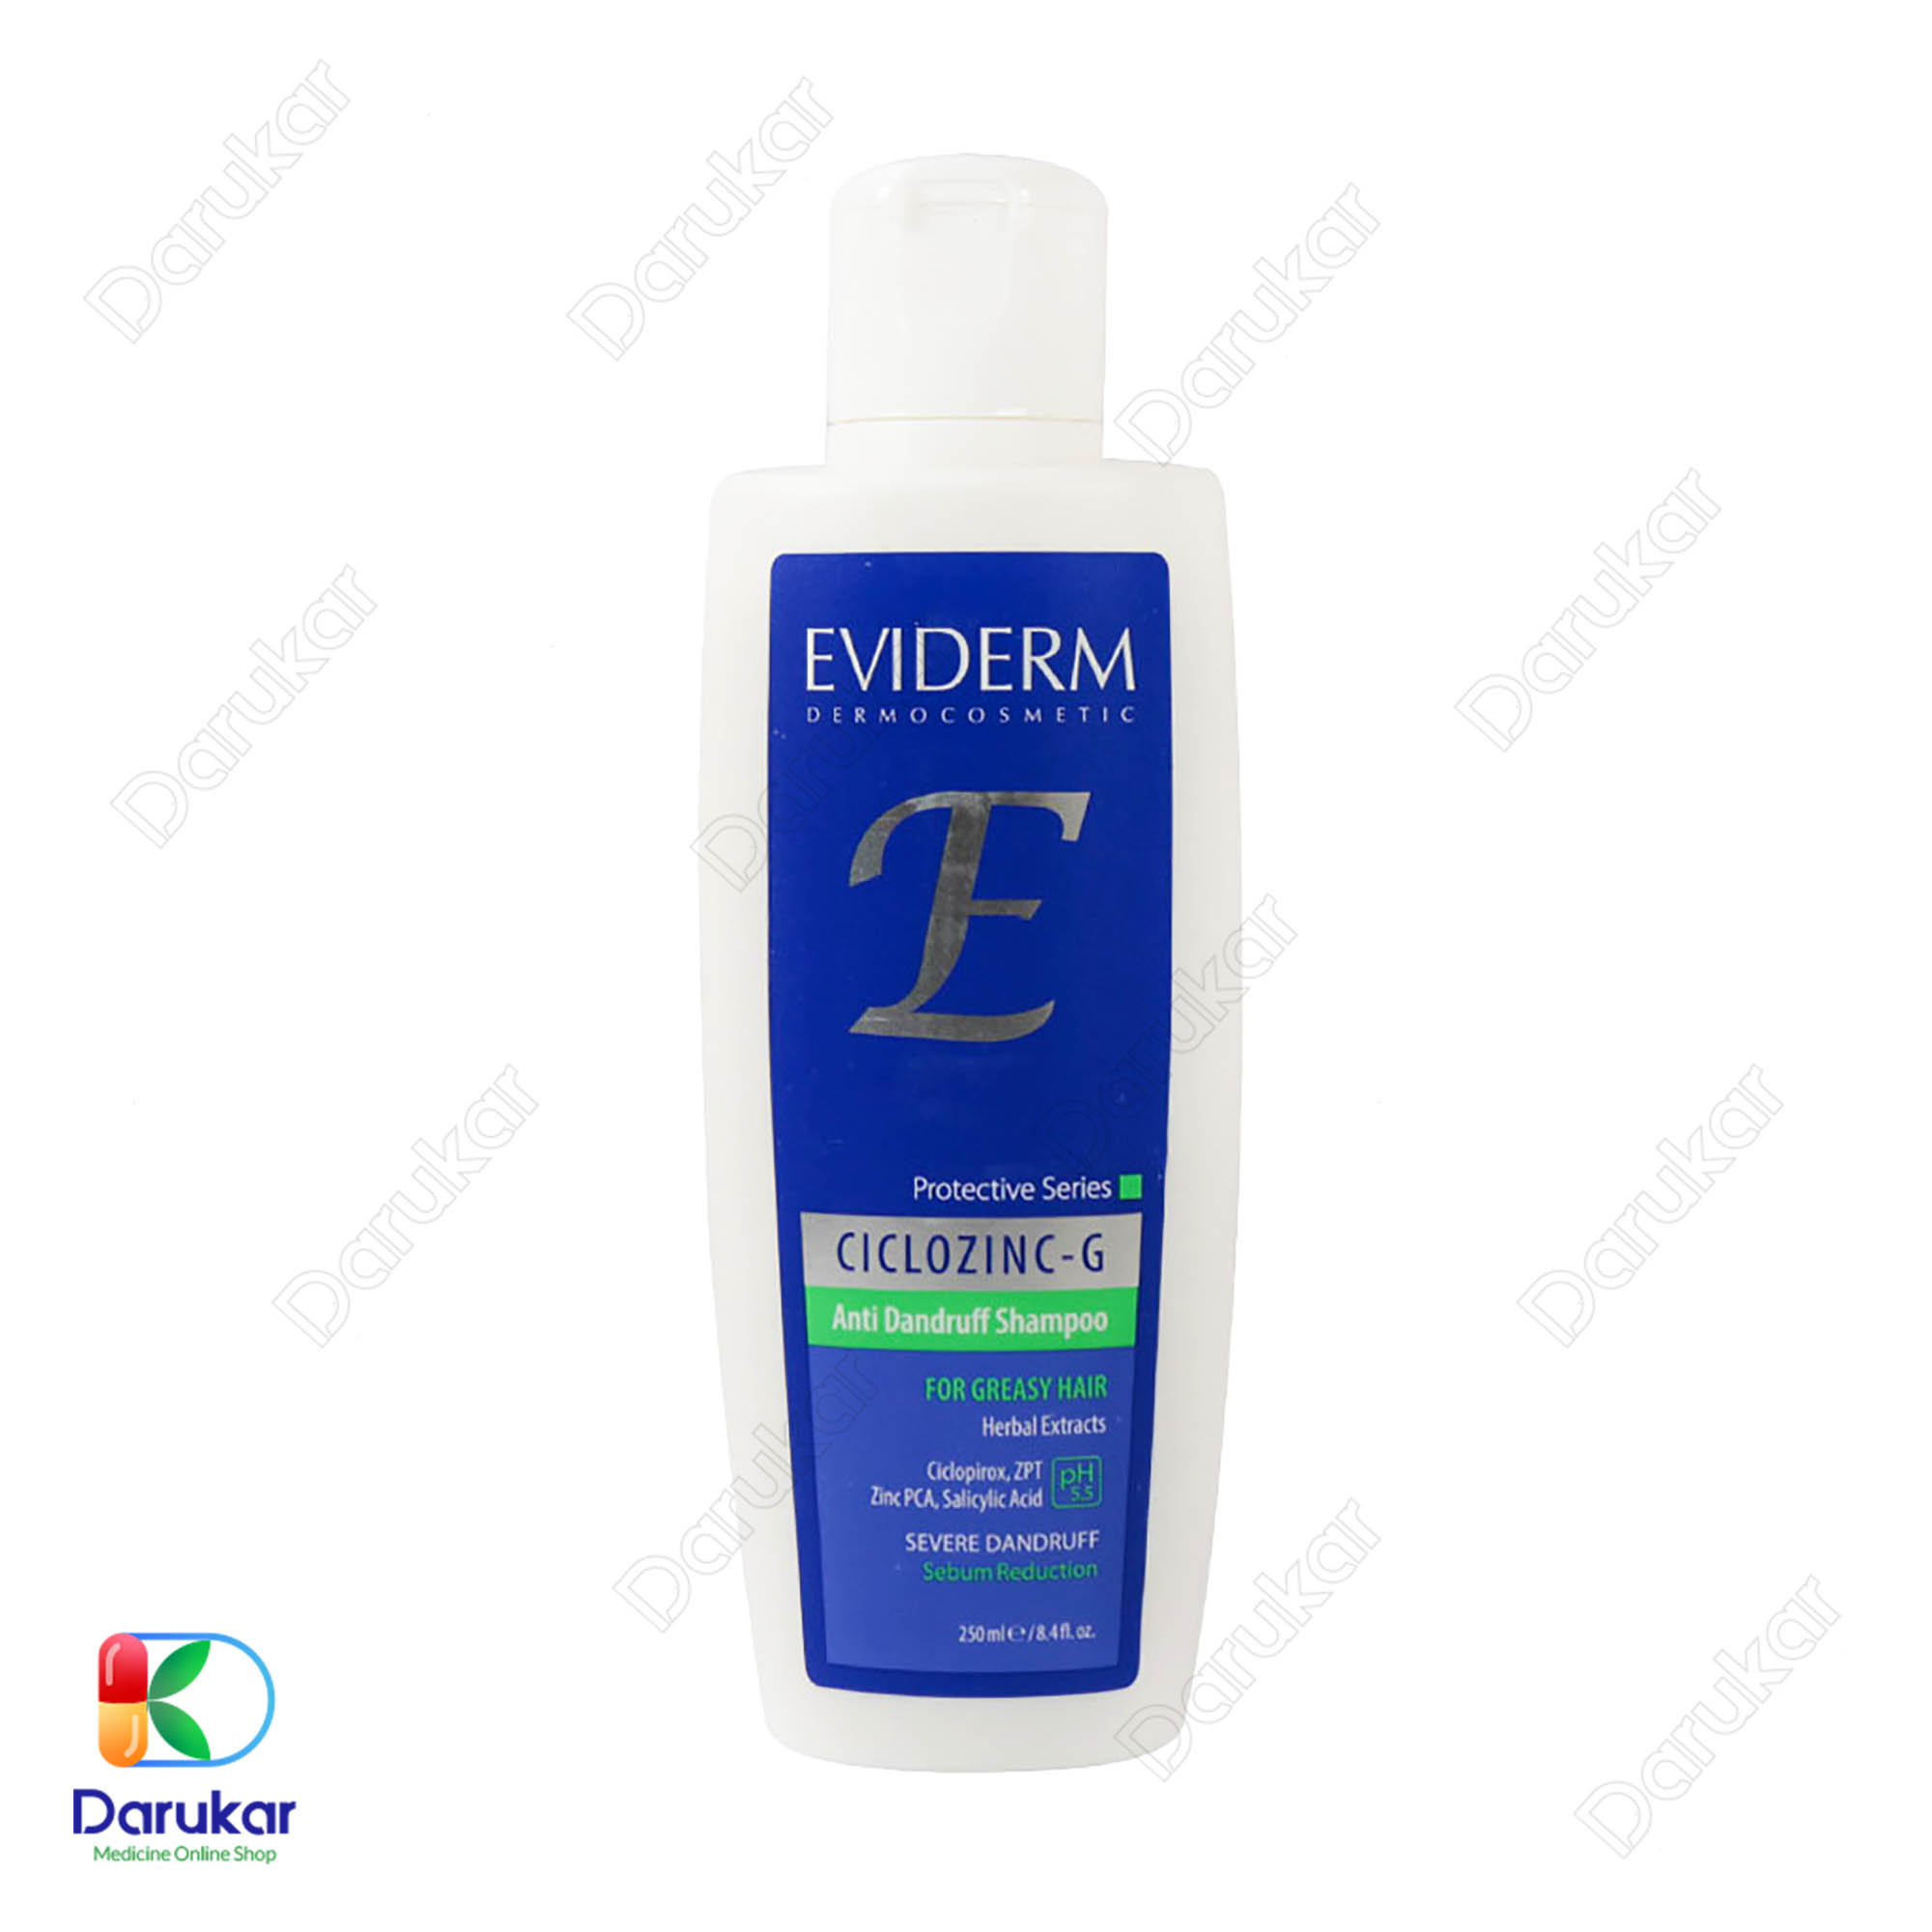 eviderm ciclozinc g anti dandruff shampoo 1